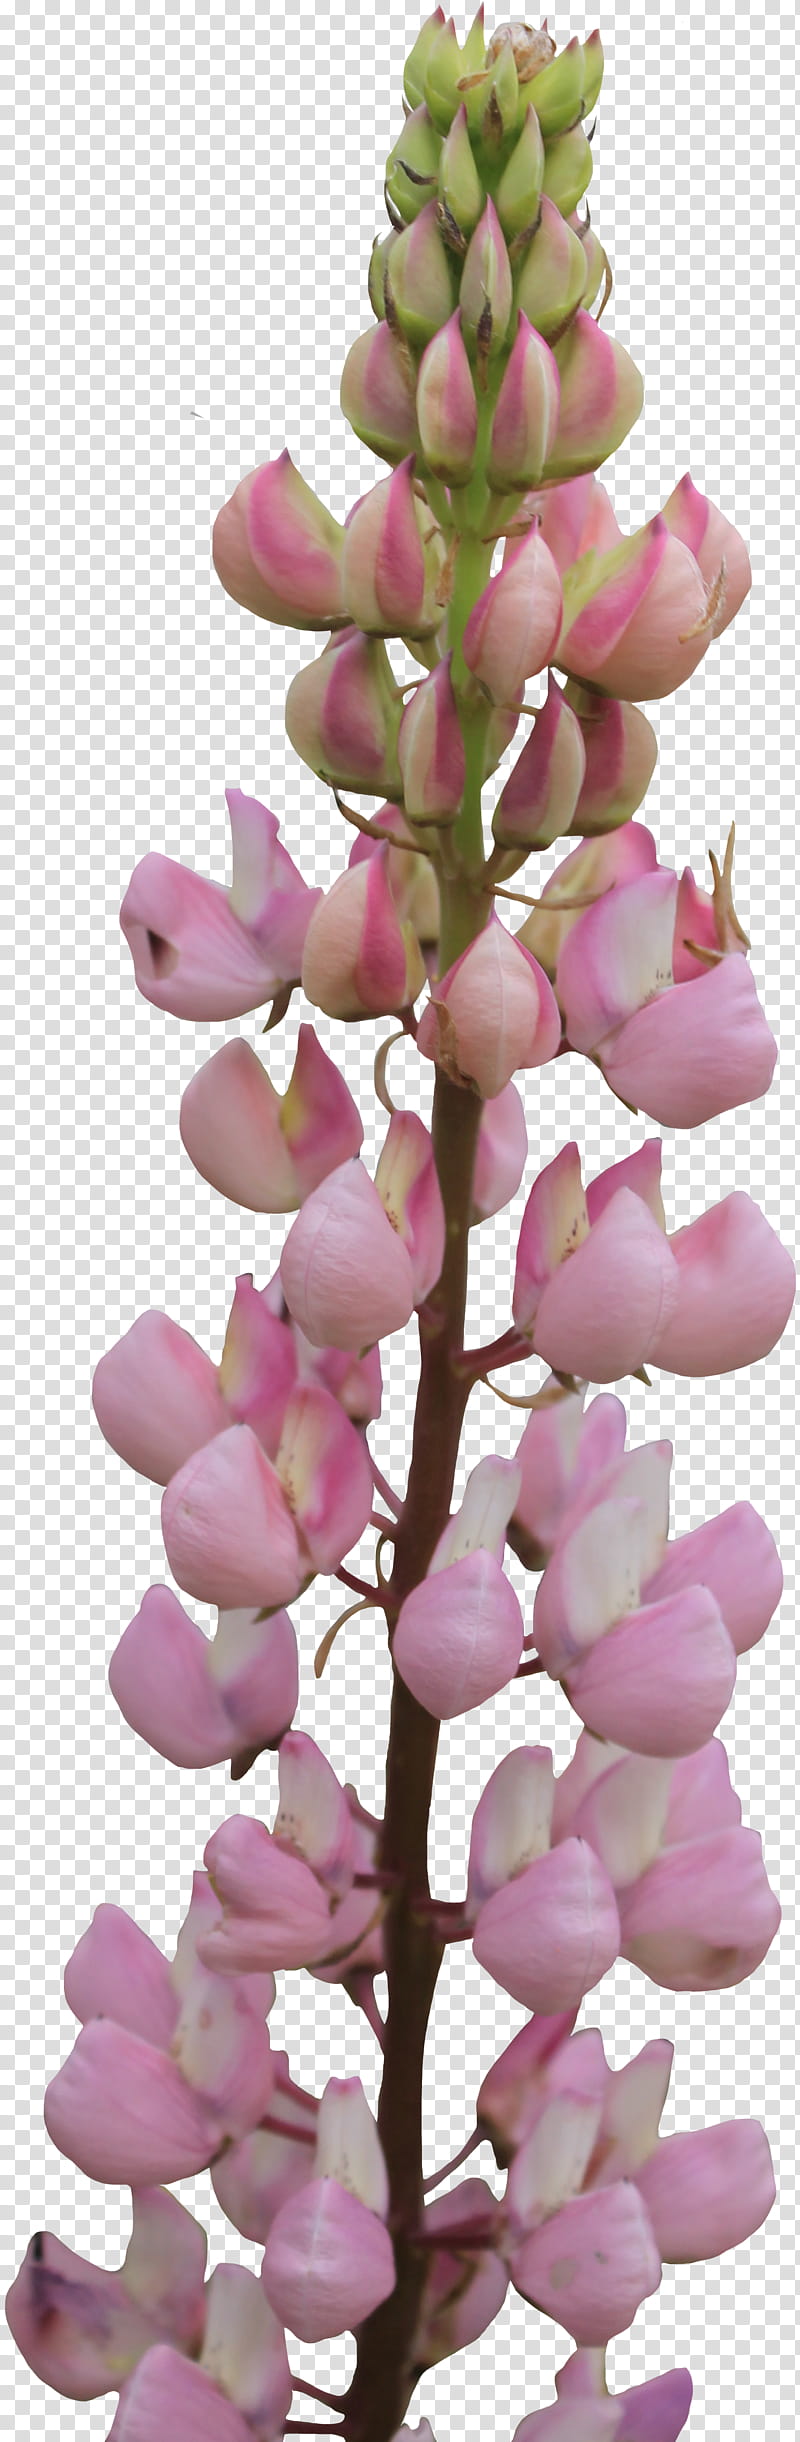 Delphinium, pink cluster flowers transparent background PNG clipart